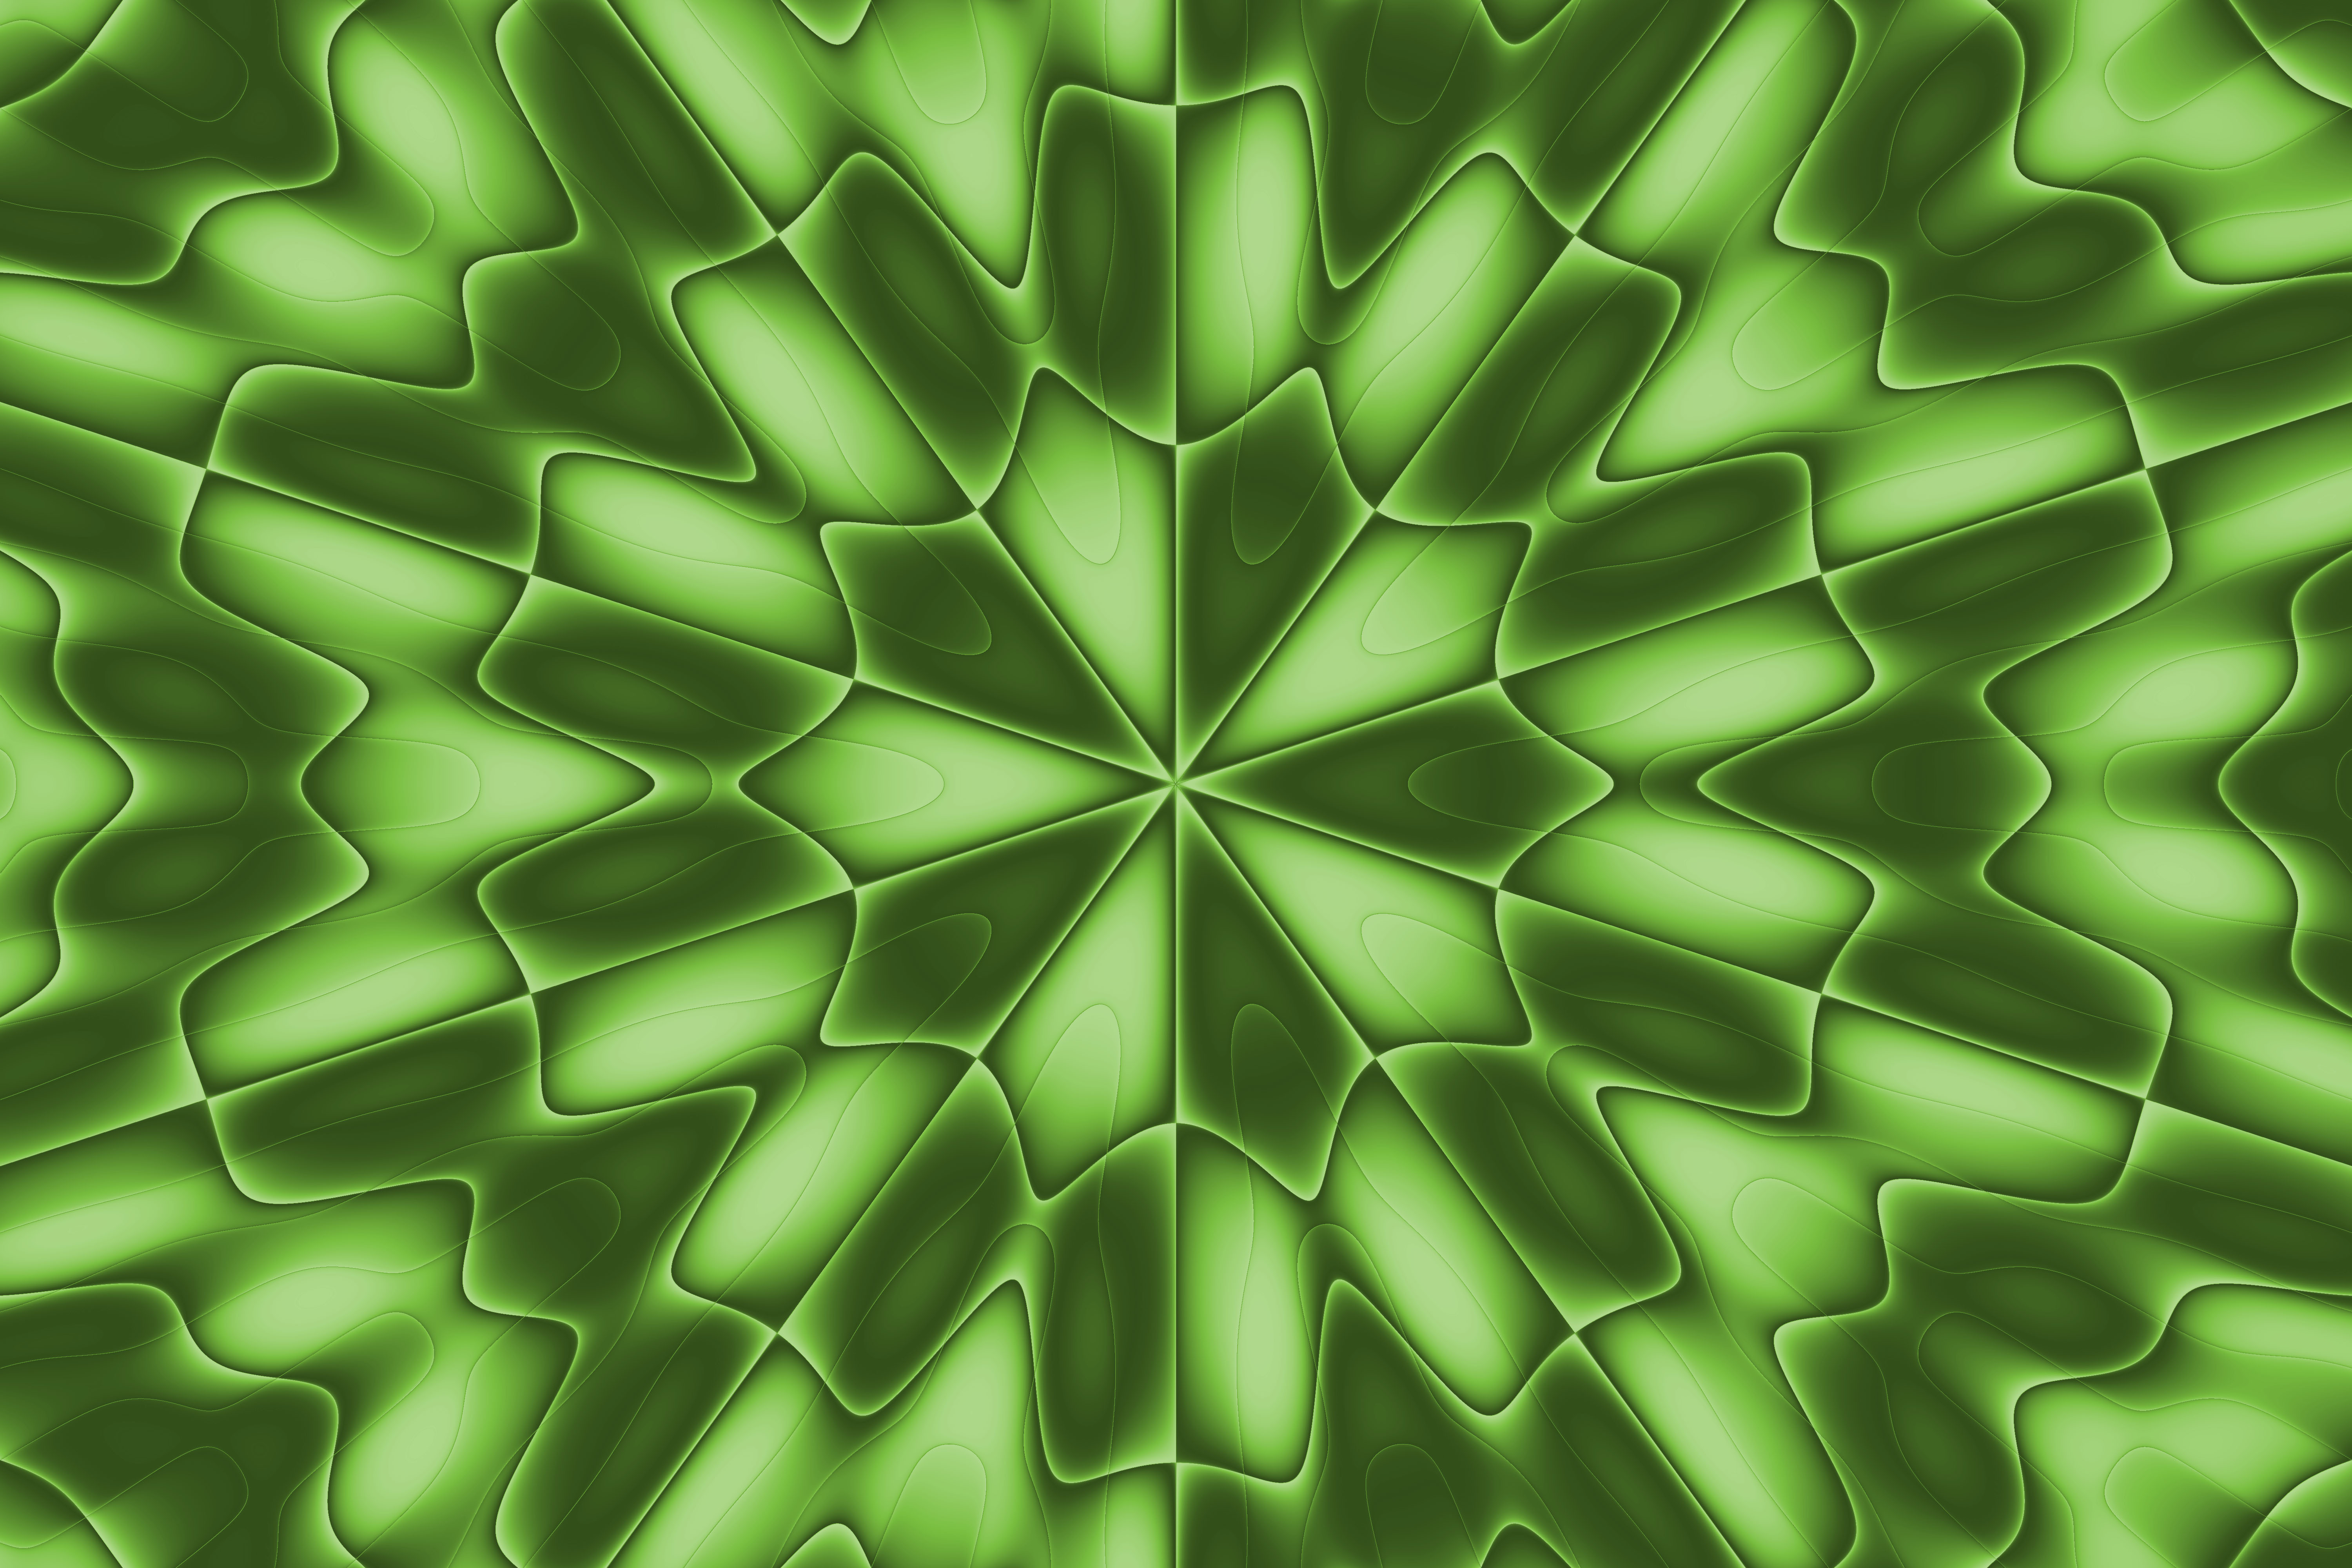 Abstract Digital Art Green Shapes 6000x4000